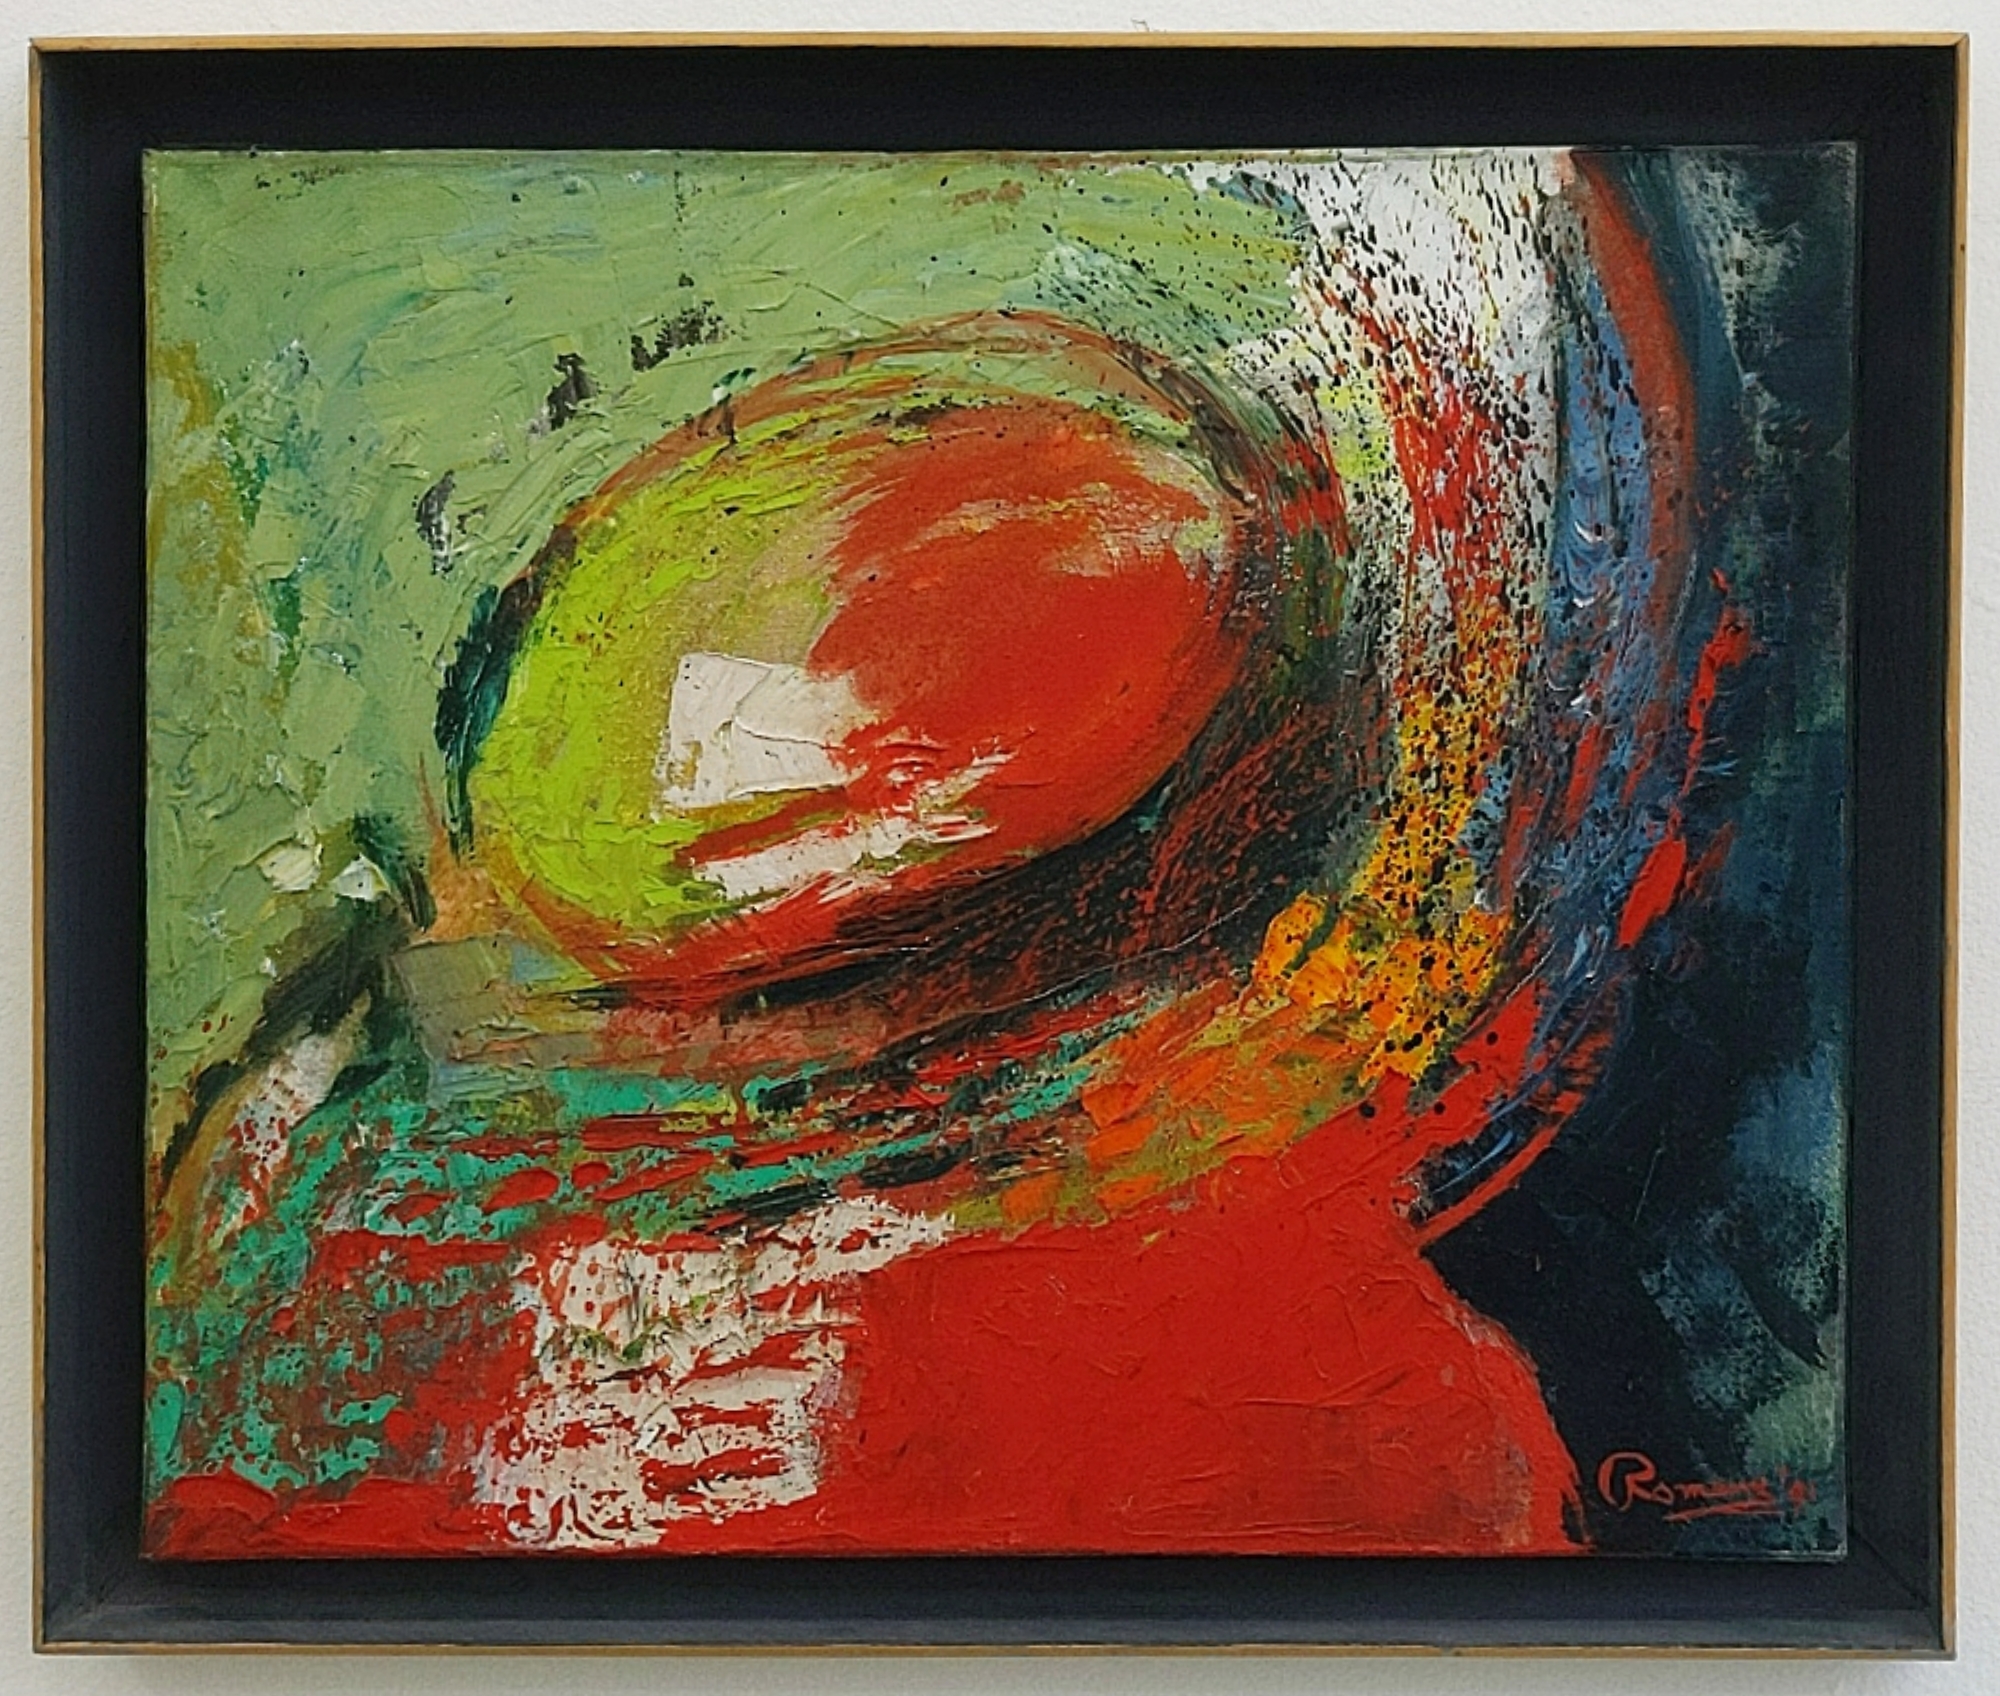 "Explosion", 1991, olja på duk   52 x 61 cm	